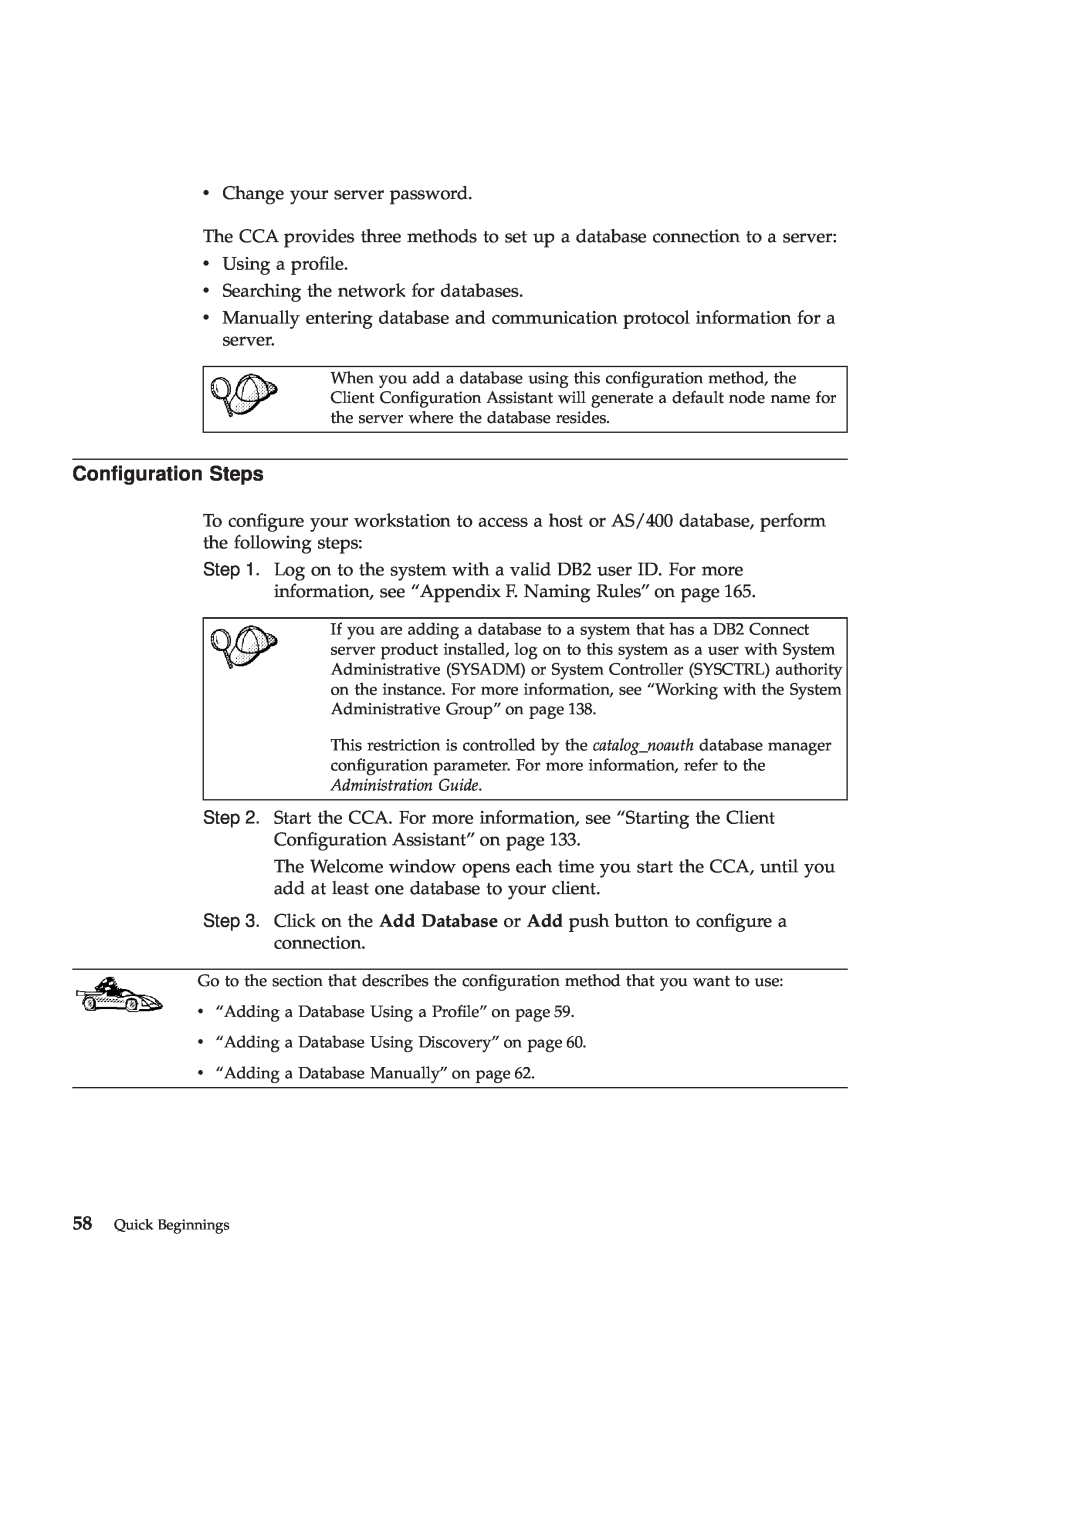 IBM GC09-2830-00 manual Conguration Steps 